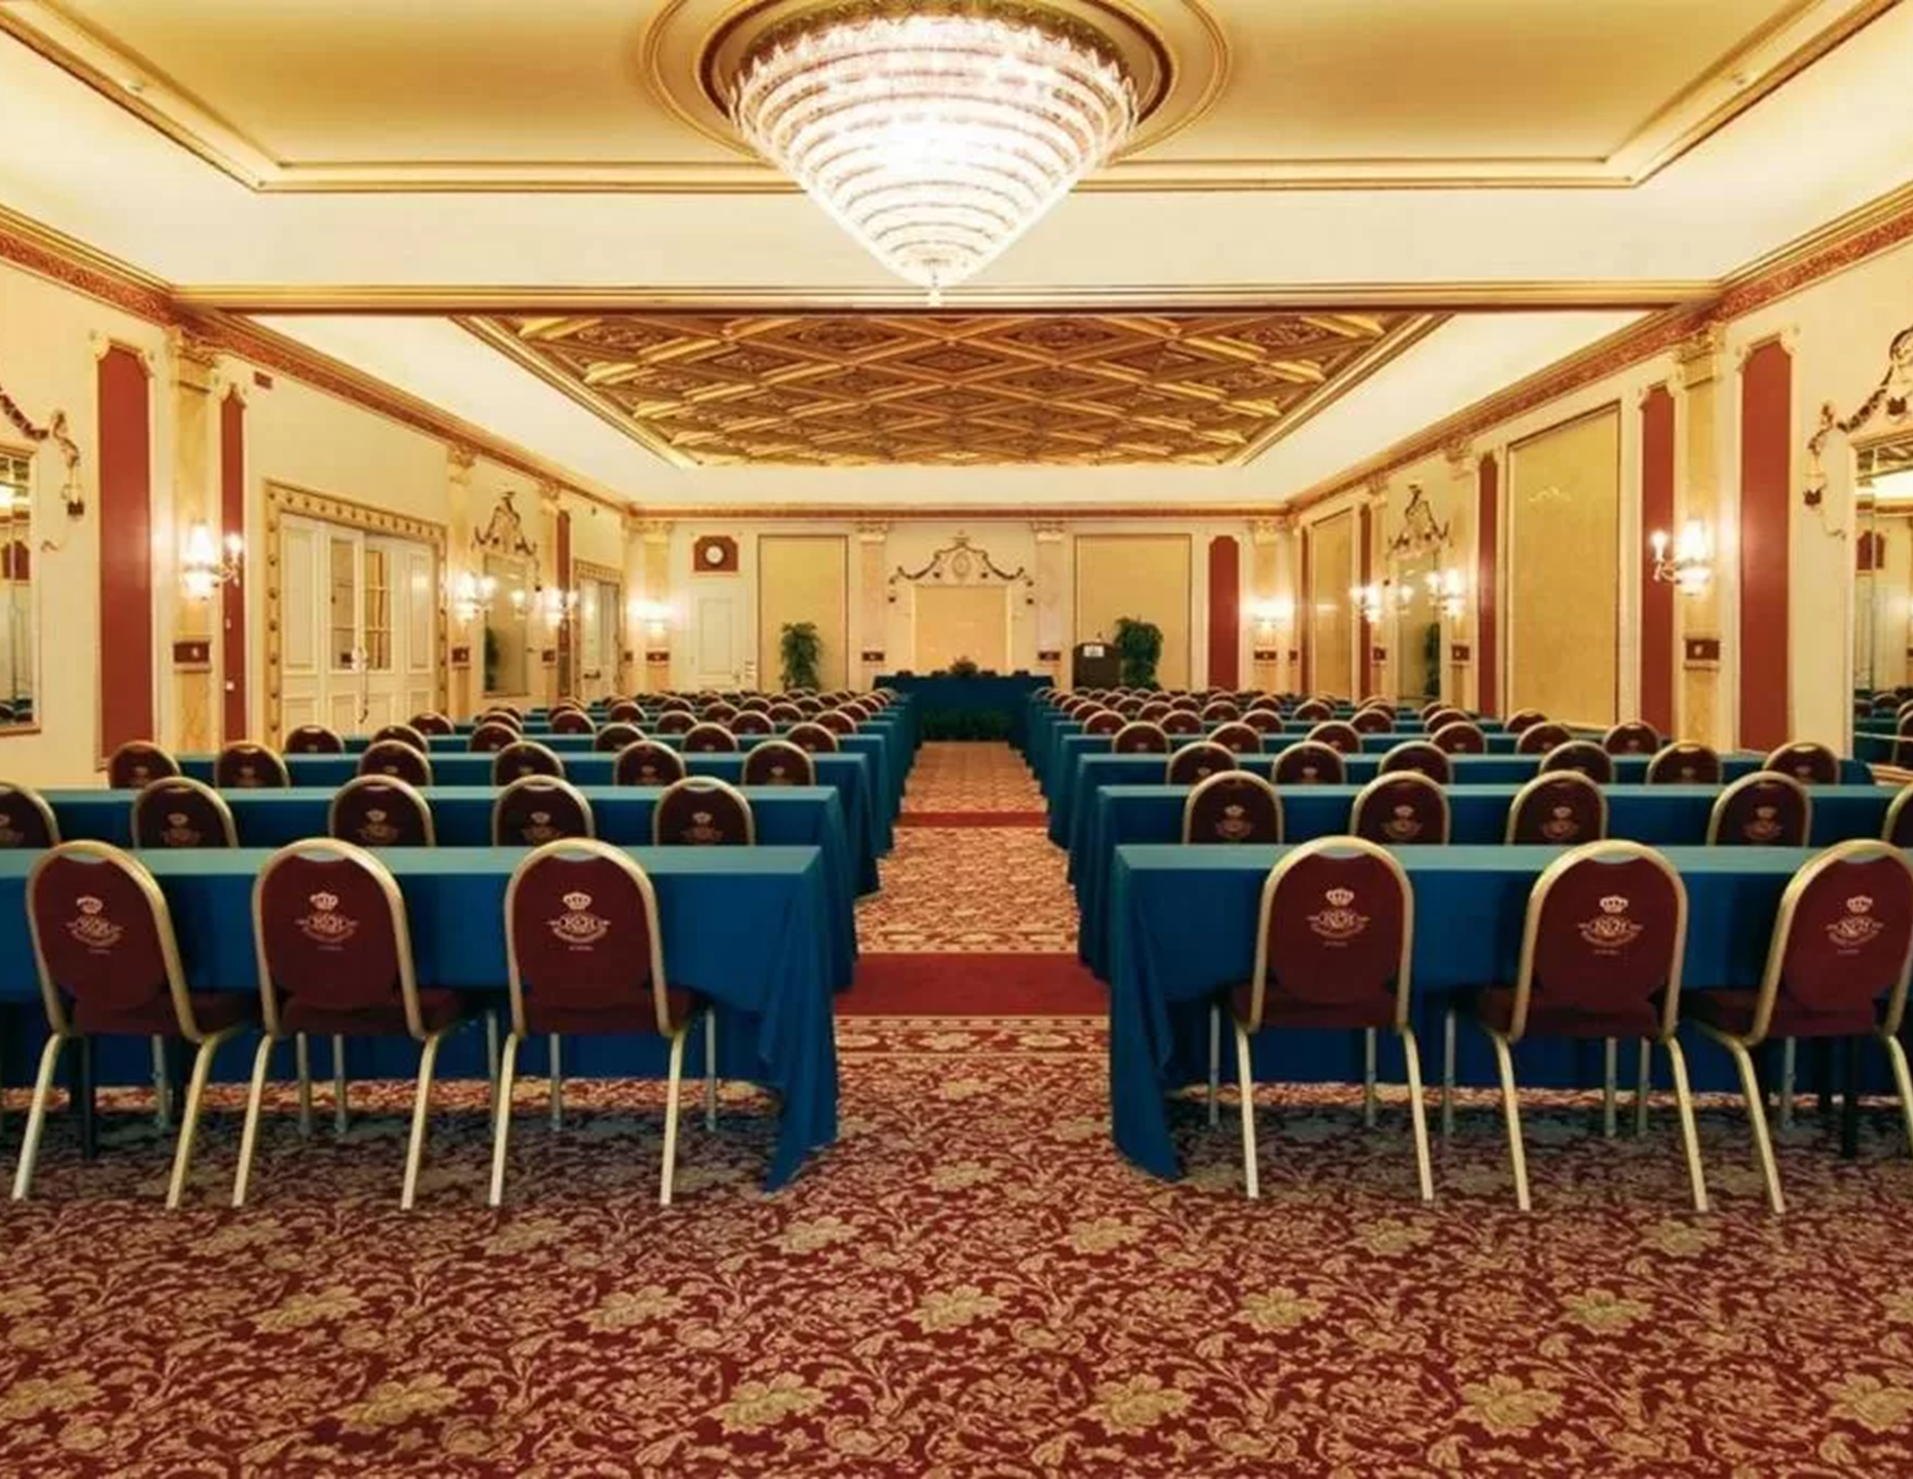 Hotel Regina Palace - Conference Room